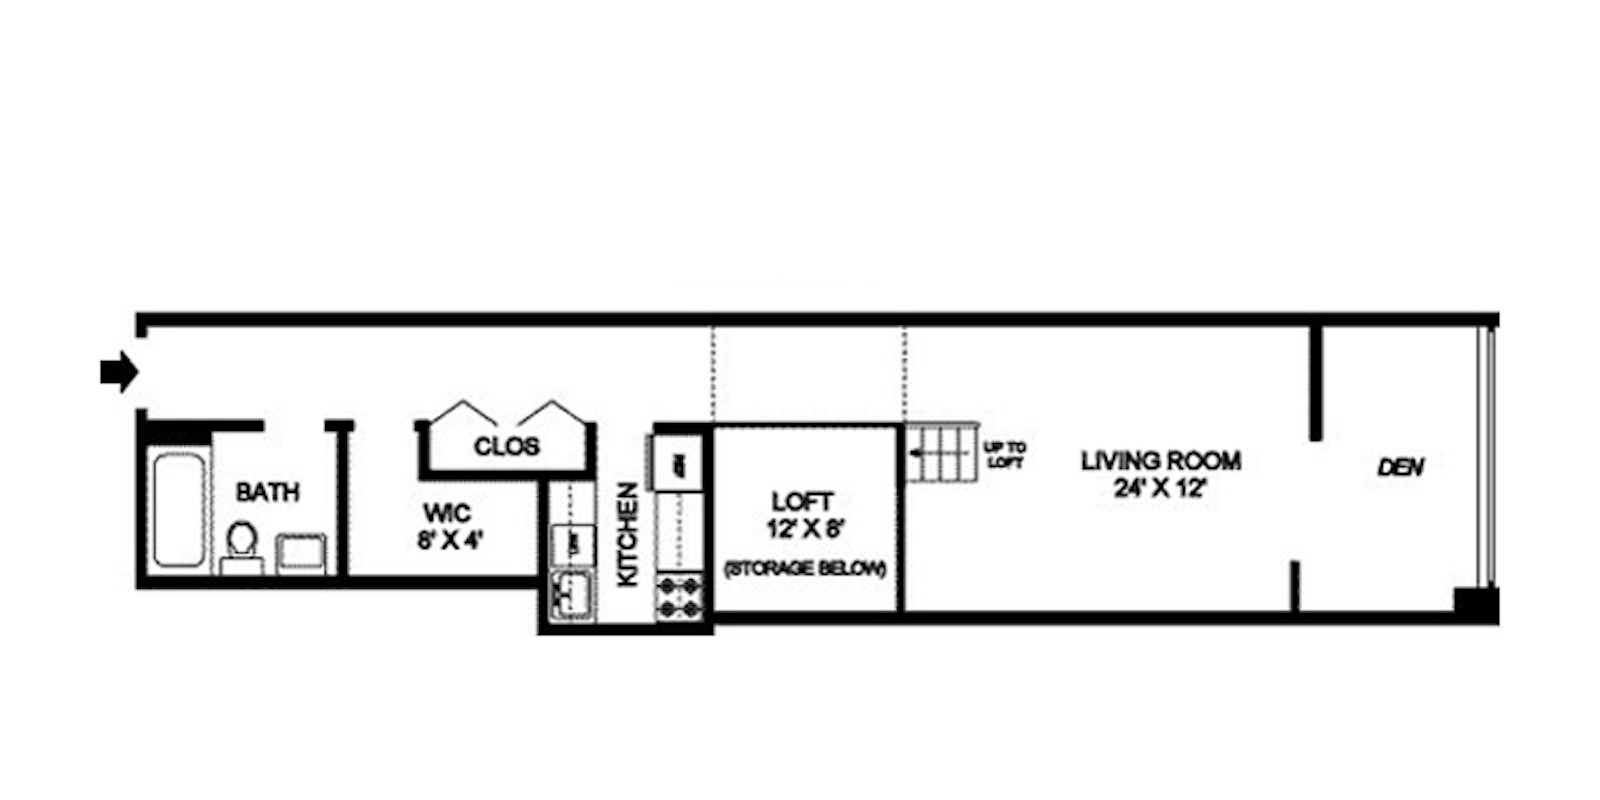 Floorplan for 310 East 46th Street, 3P